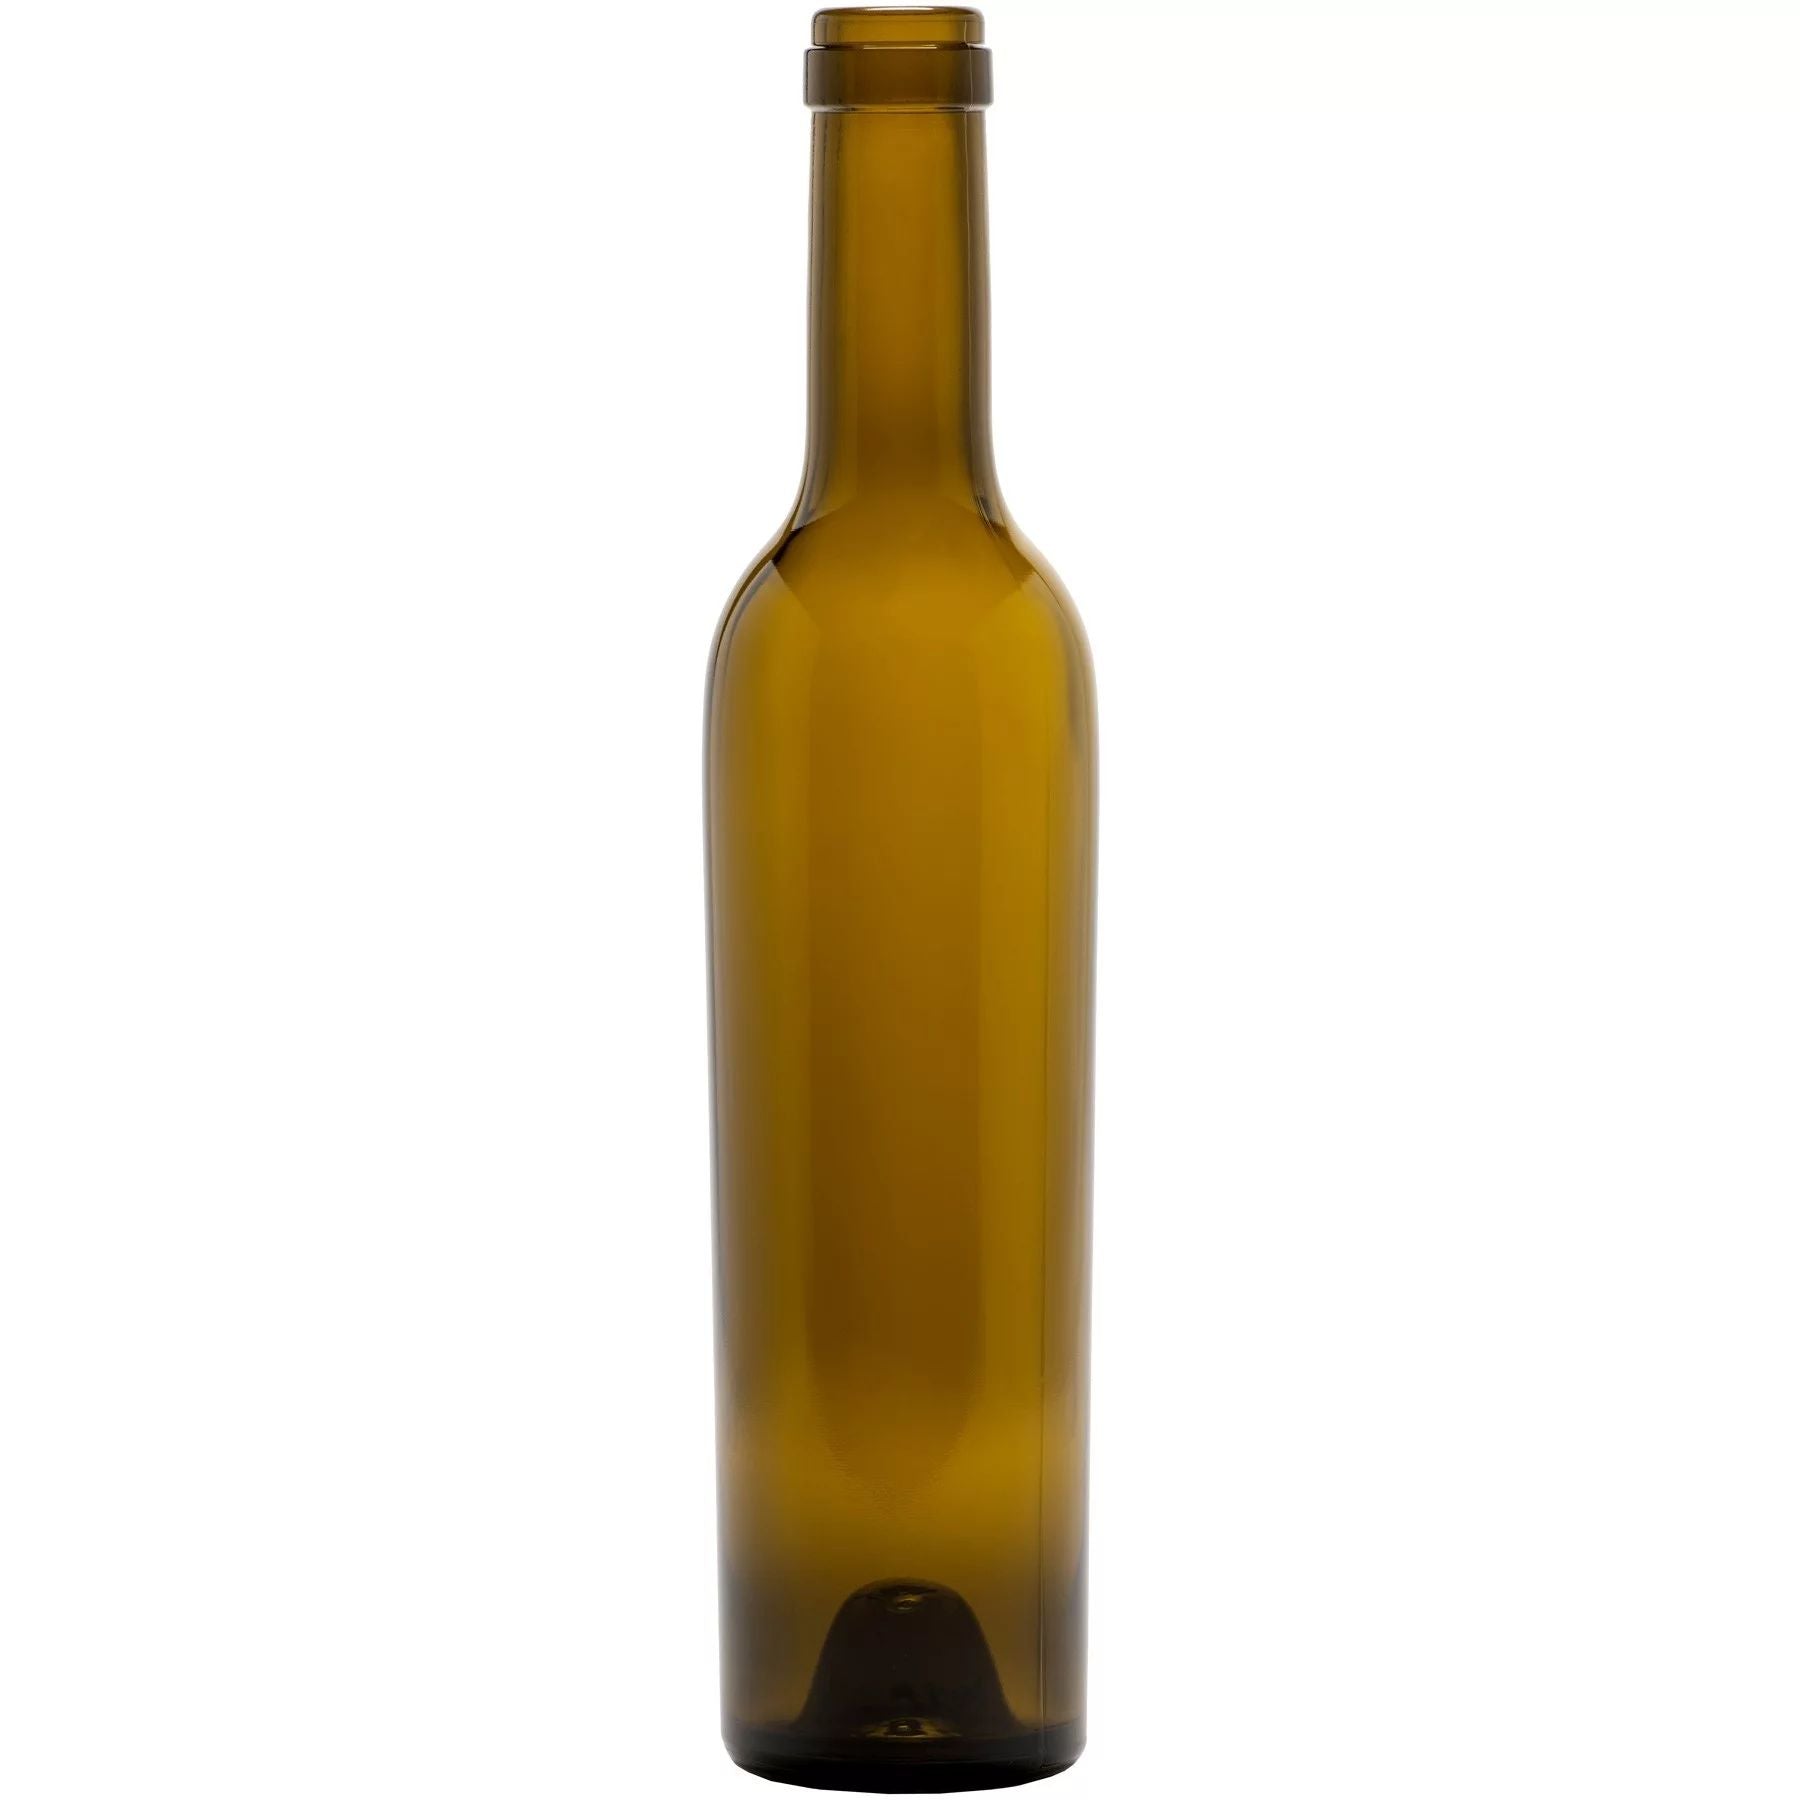 Bordeaux Wine Bottles - 375 ml, Antique Green - Case of 12